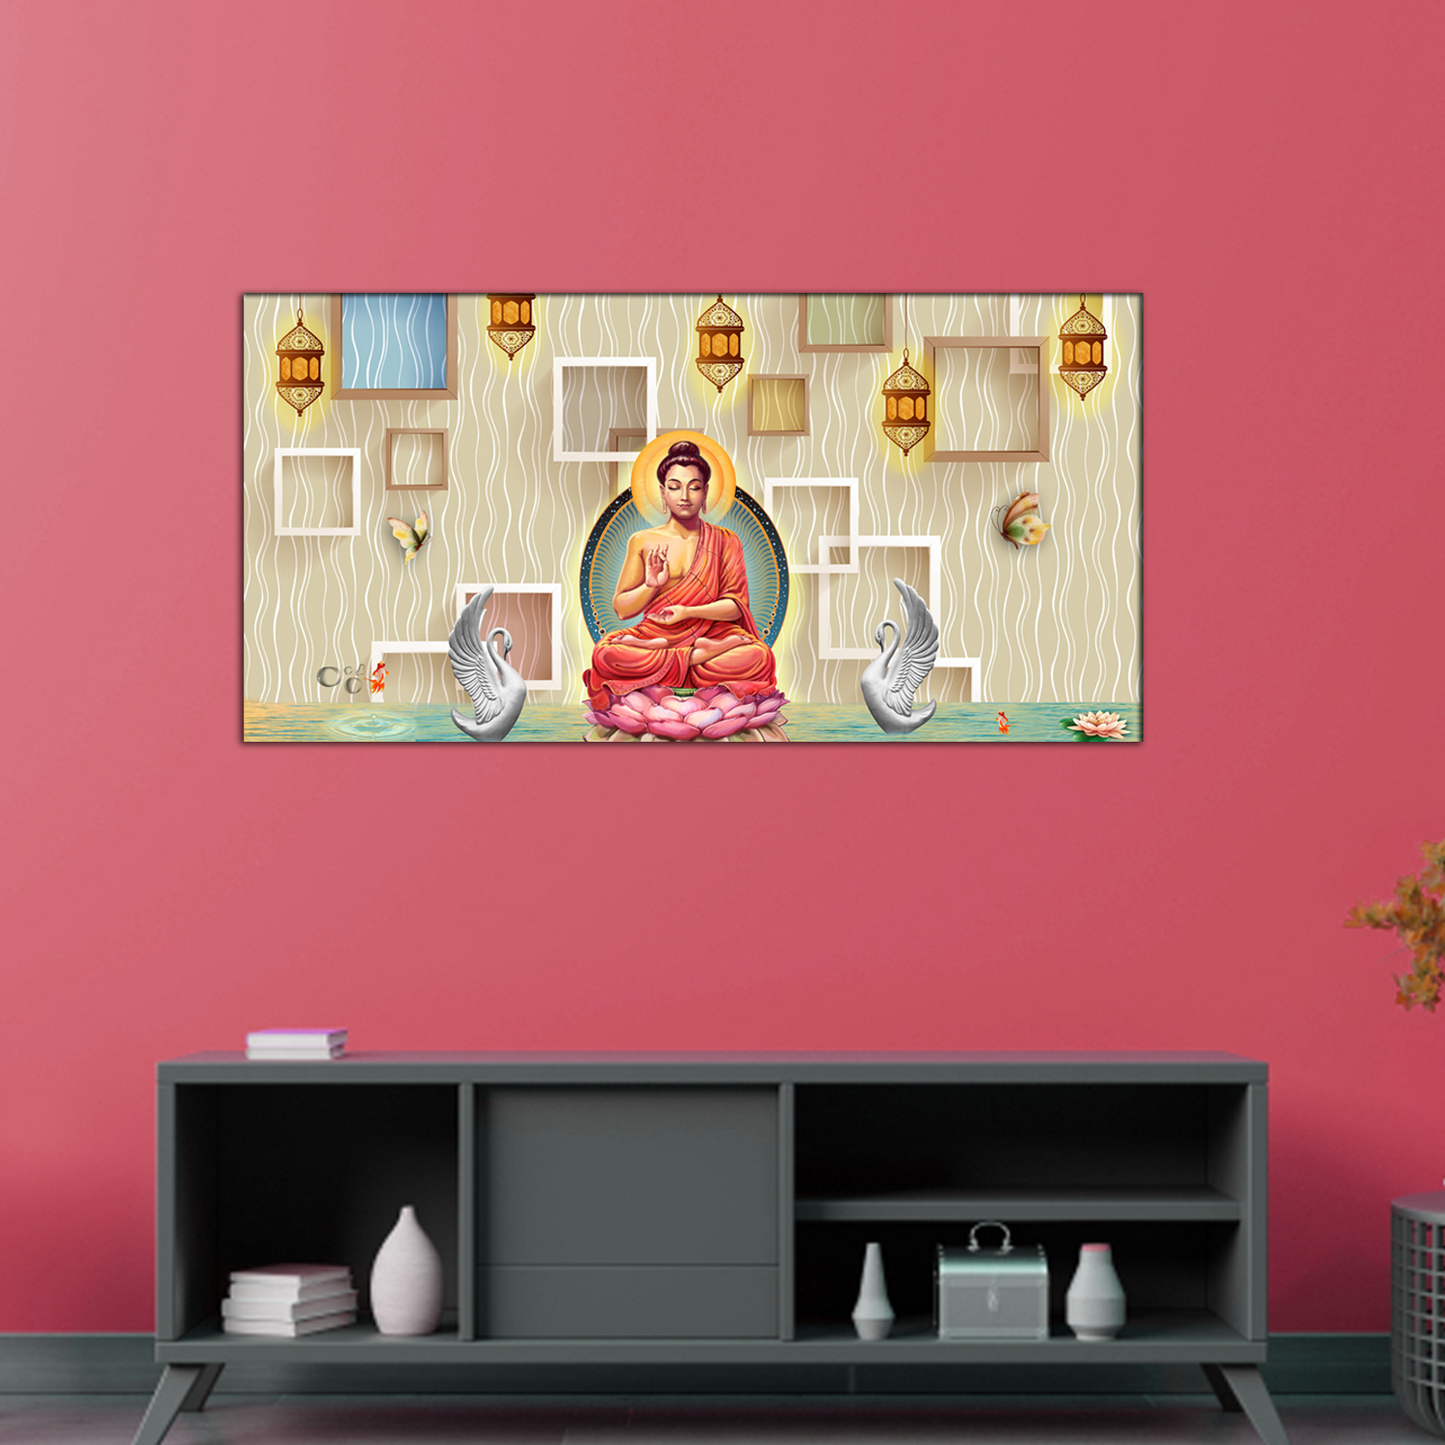 Sitting Buddha Premium Quality Wallpaper